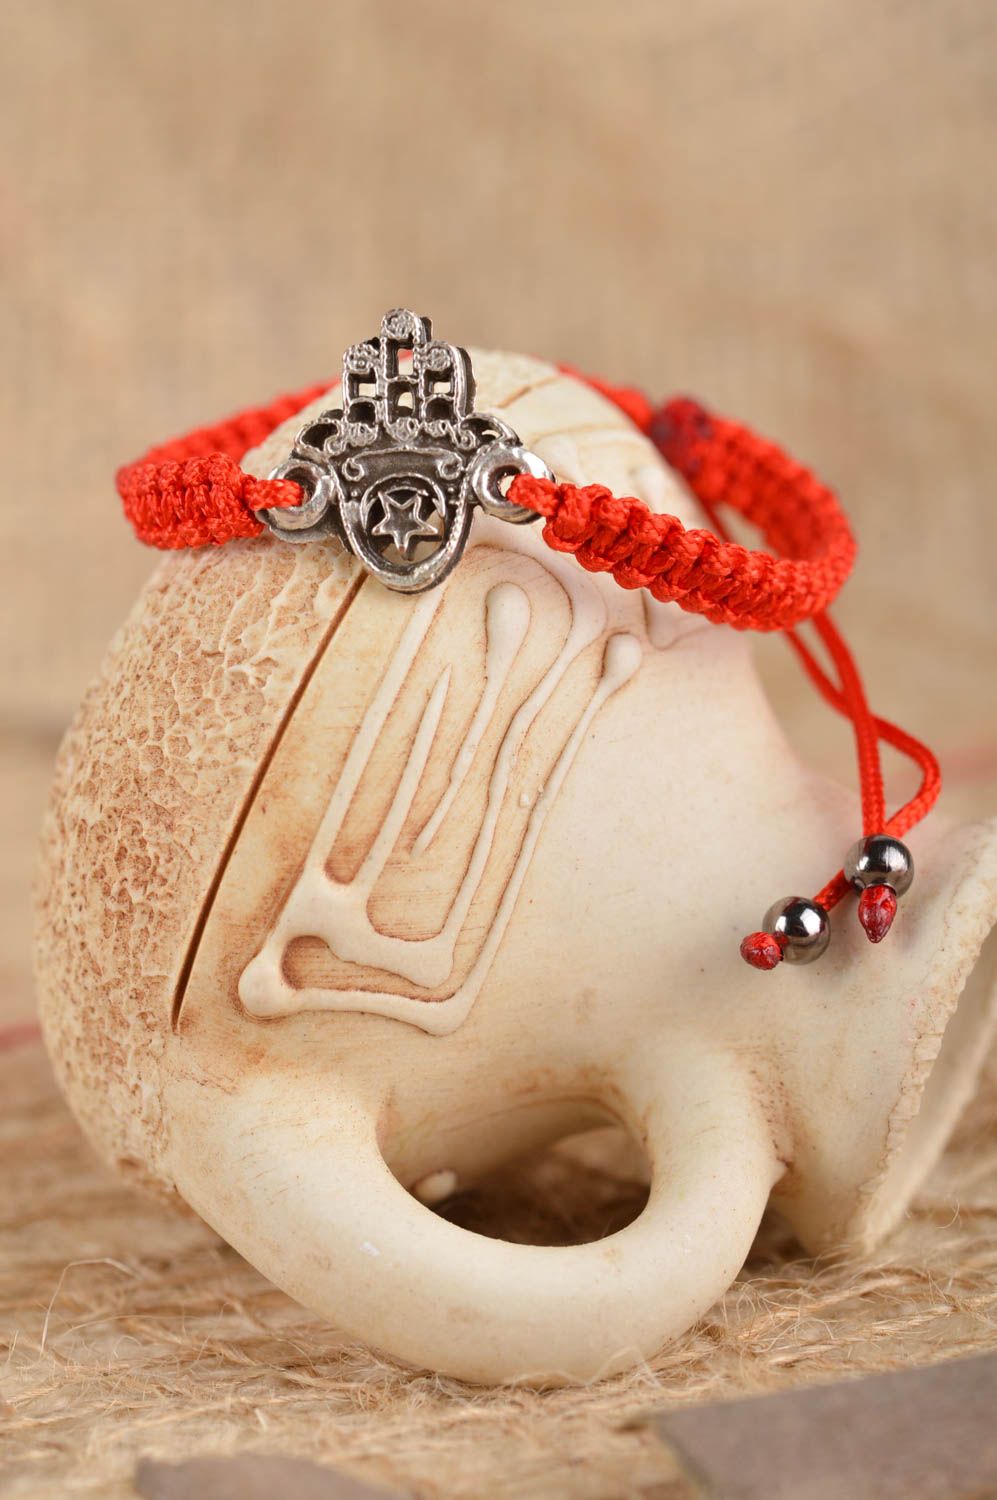 Unusual handmade wrist bracelet fashion tips string bracelet designs gift ideas photo 1